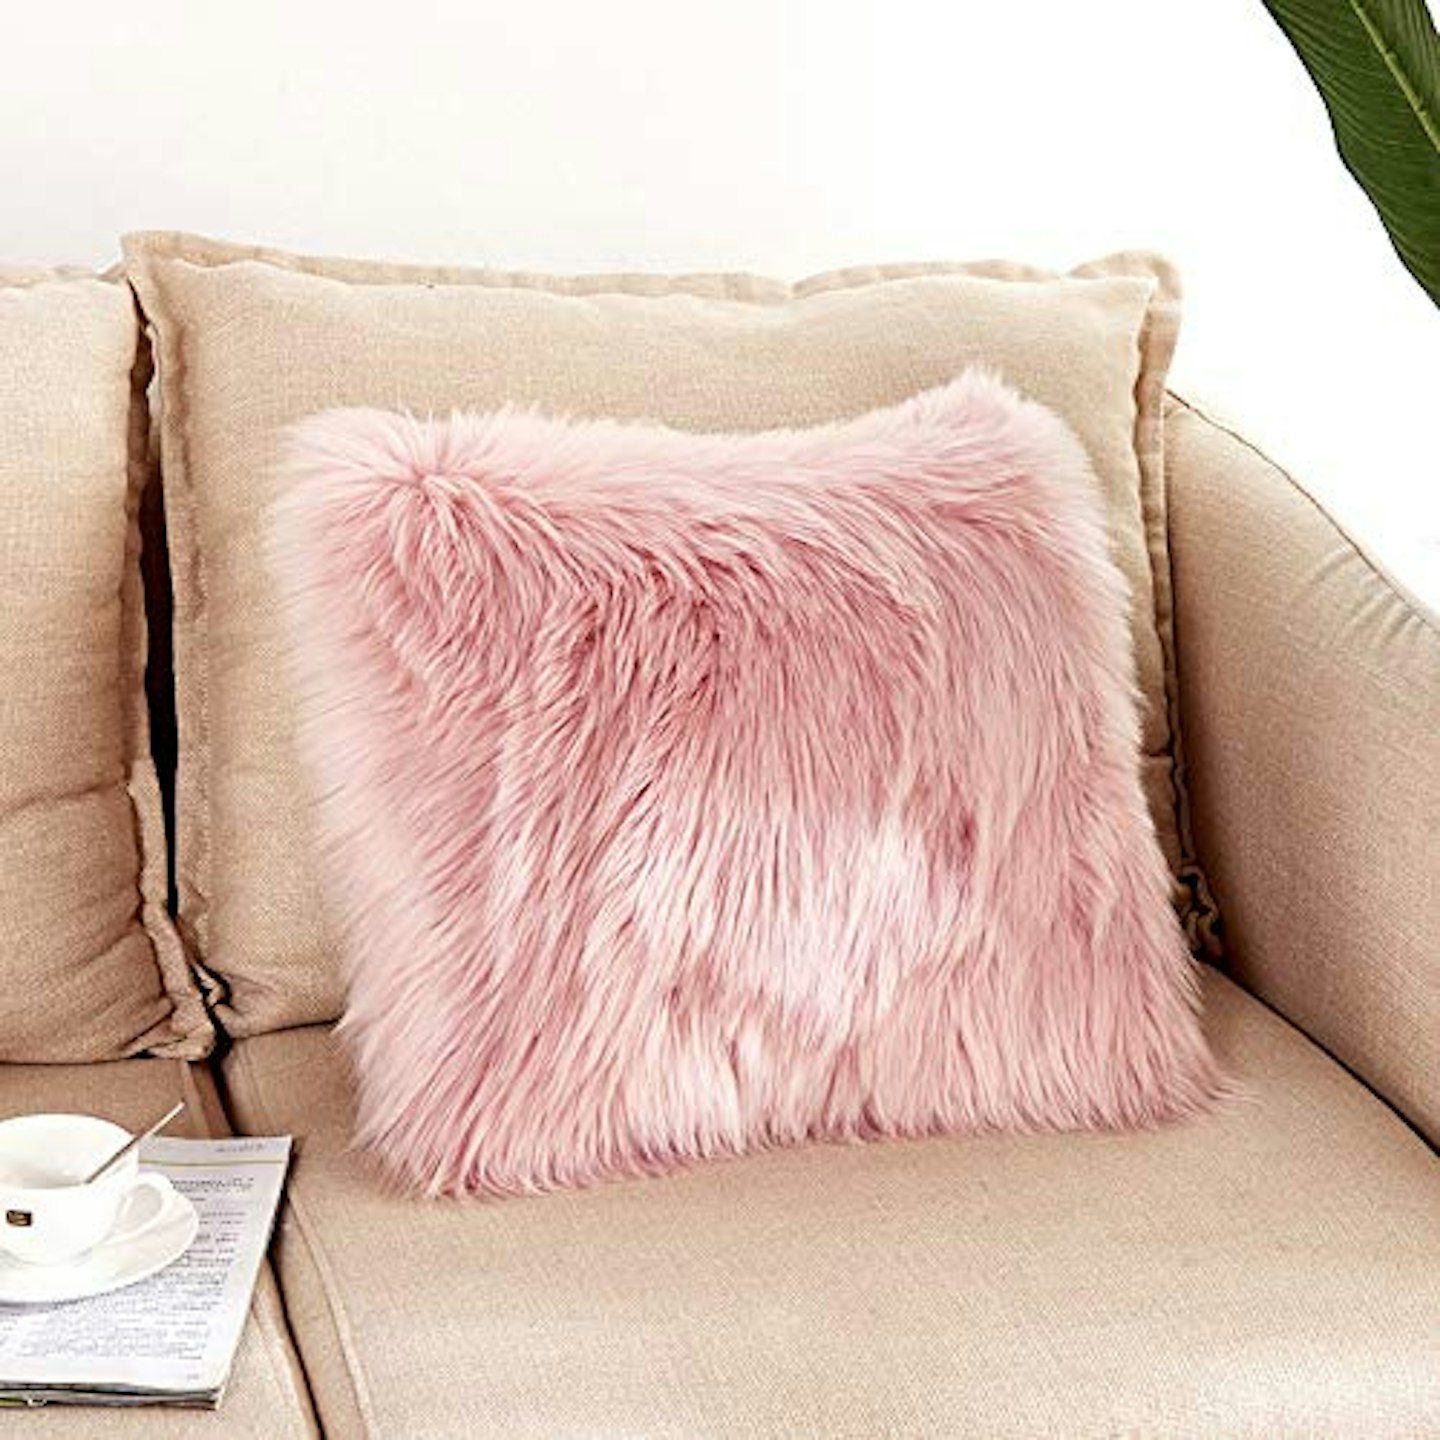 Luxury faux fur pillow cover, £10.99